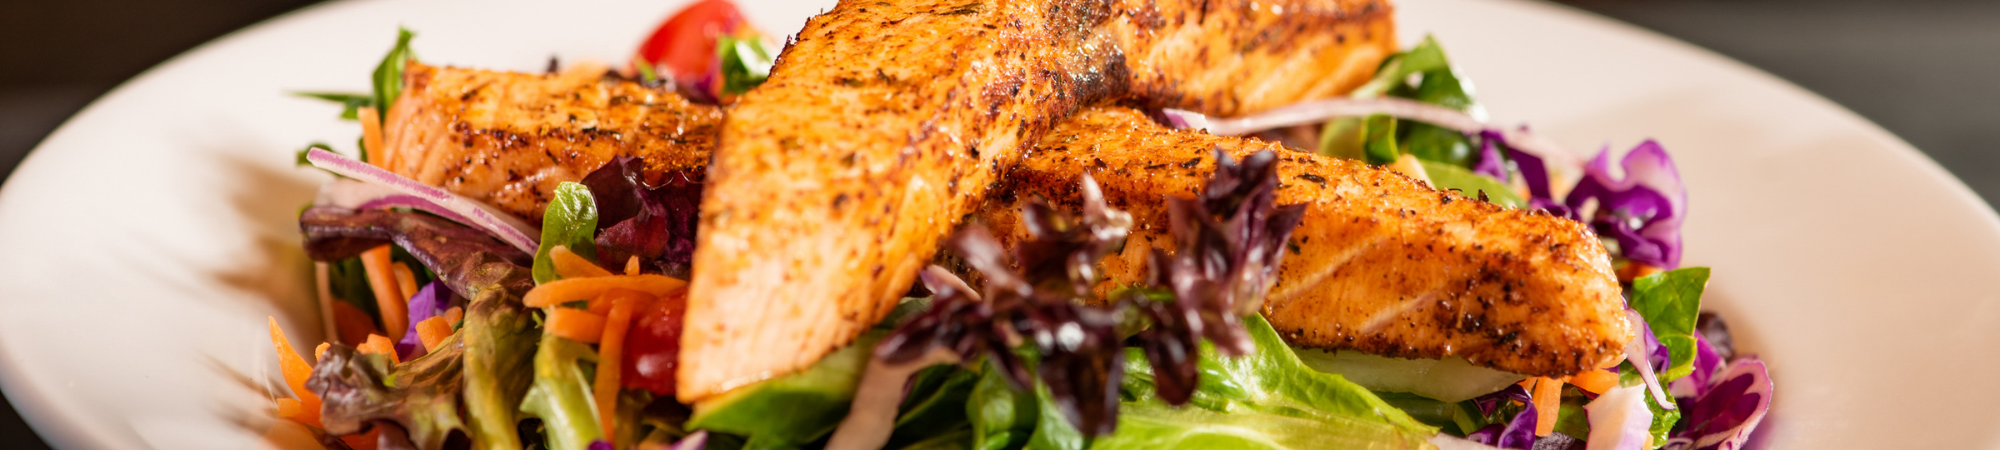 seared fish over a fresh salad 